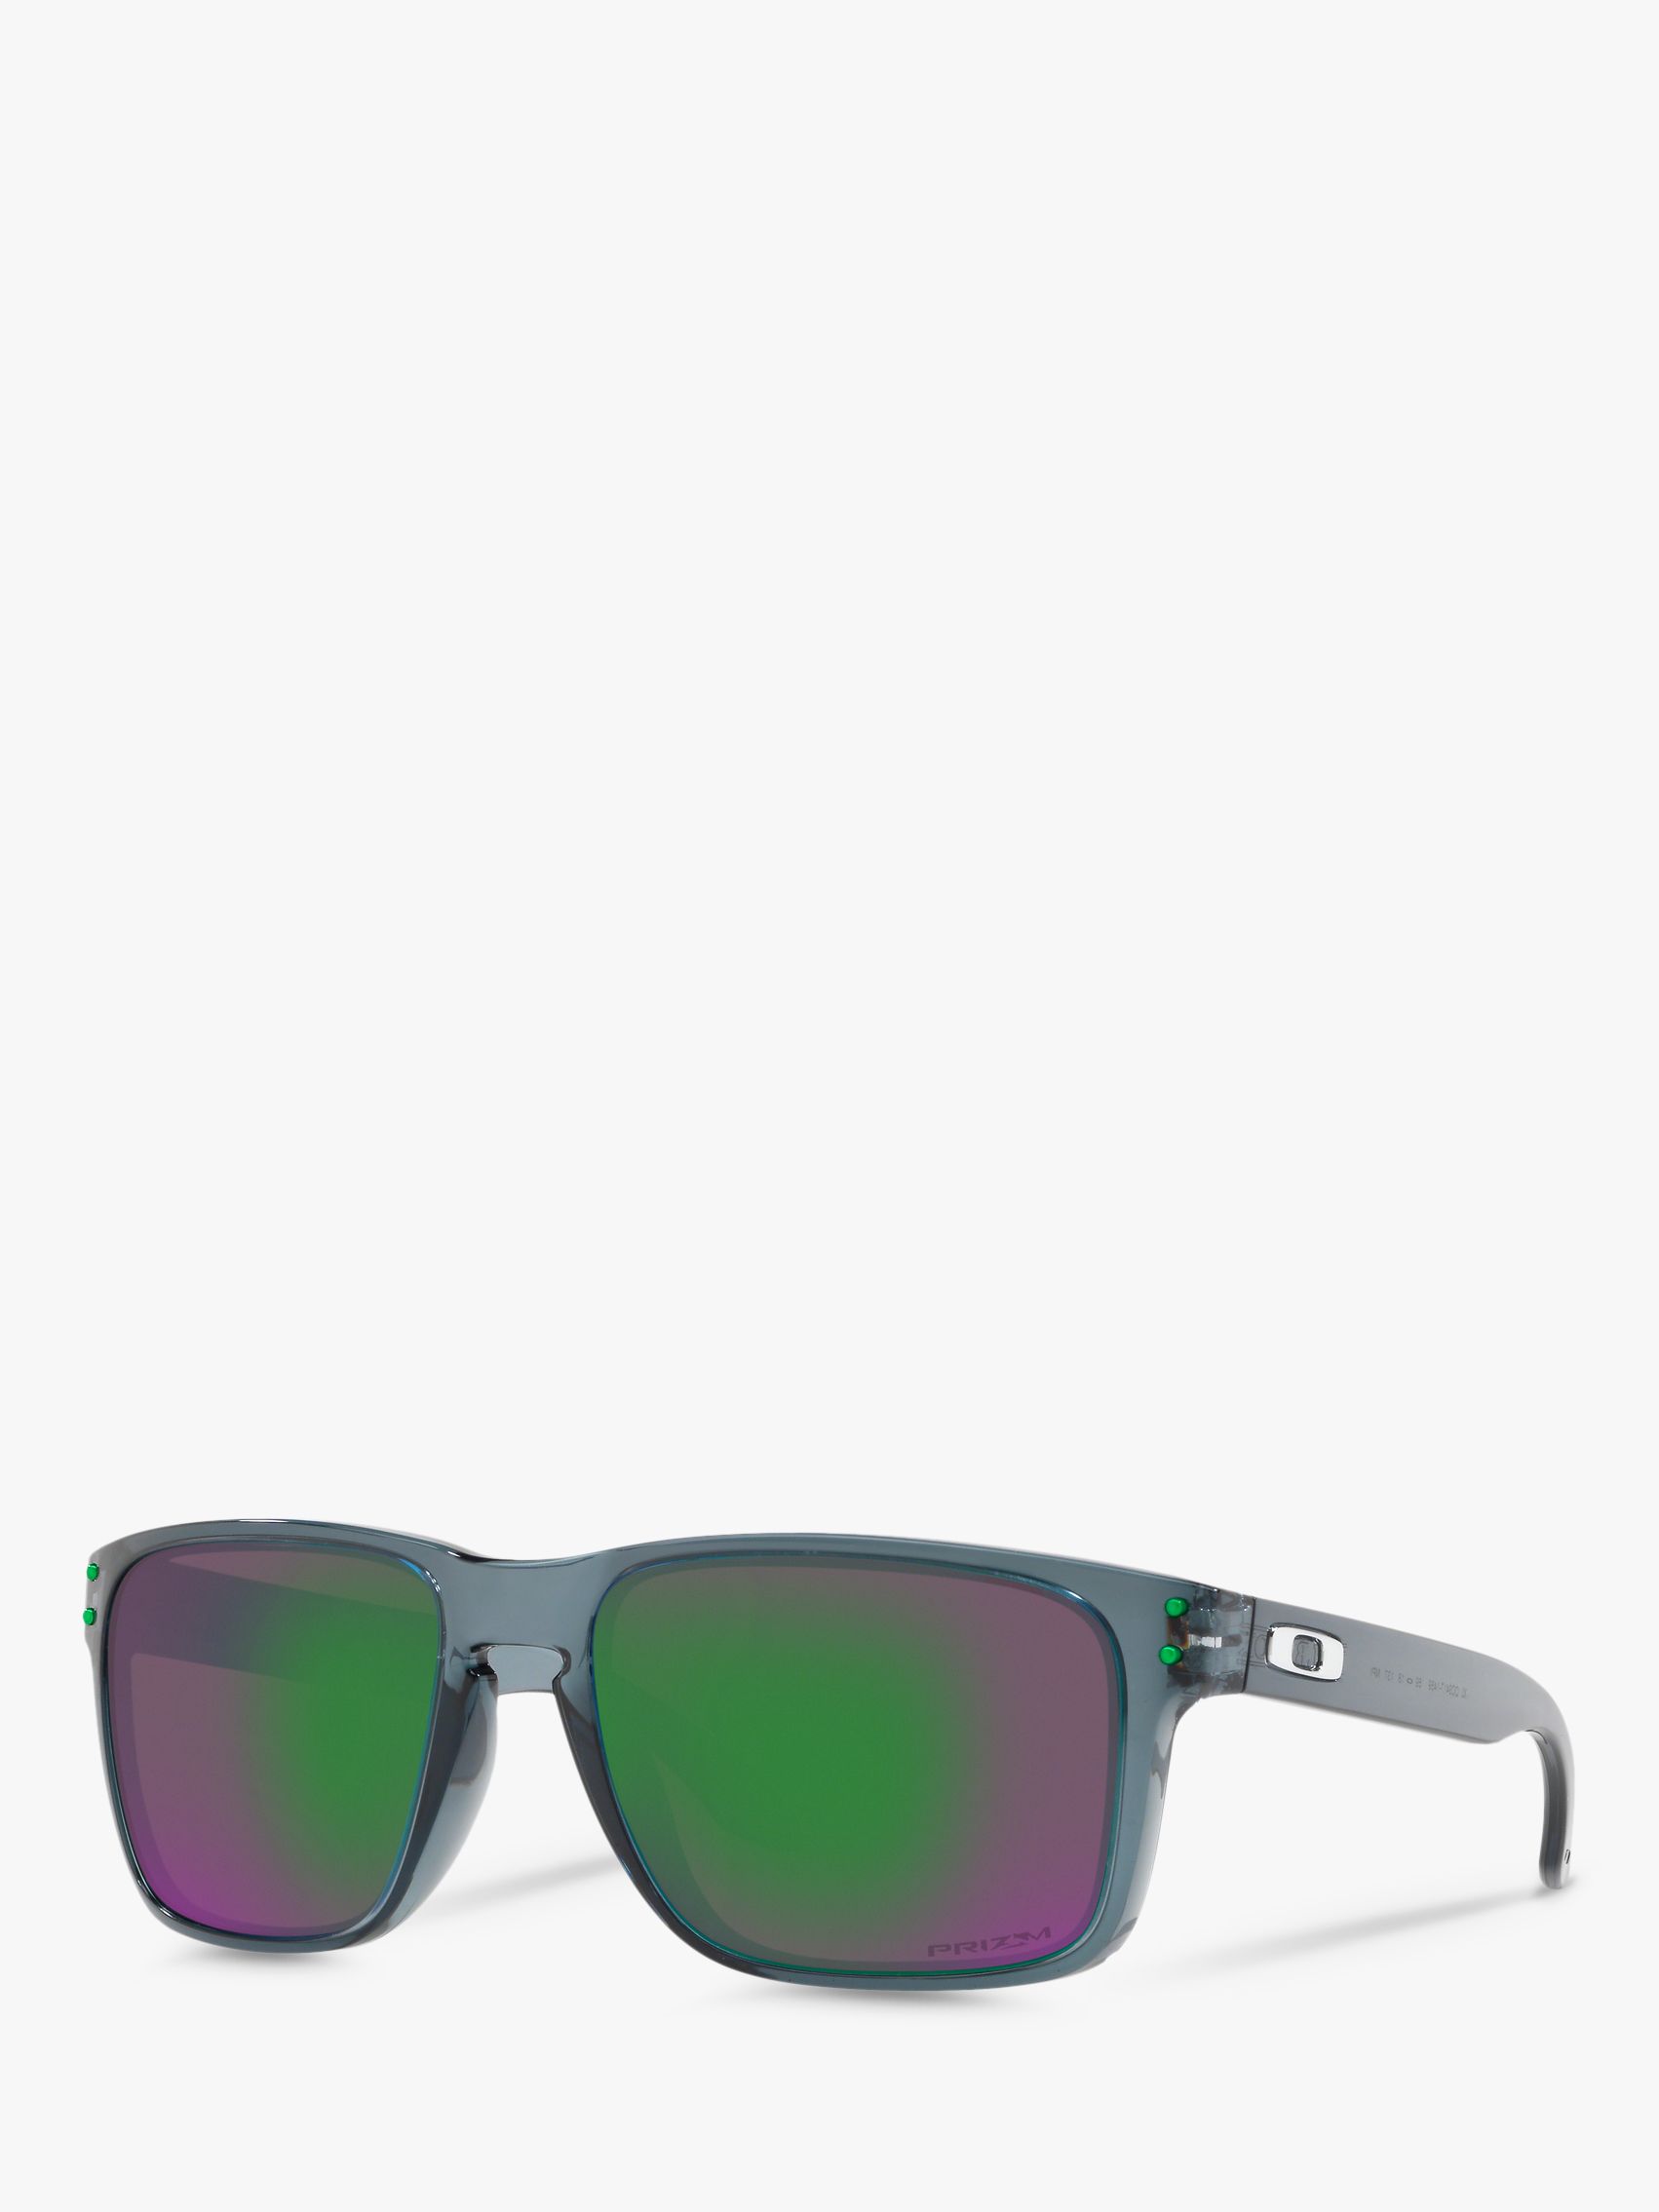 men's holbrook sunglasses